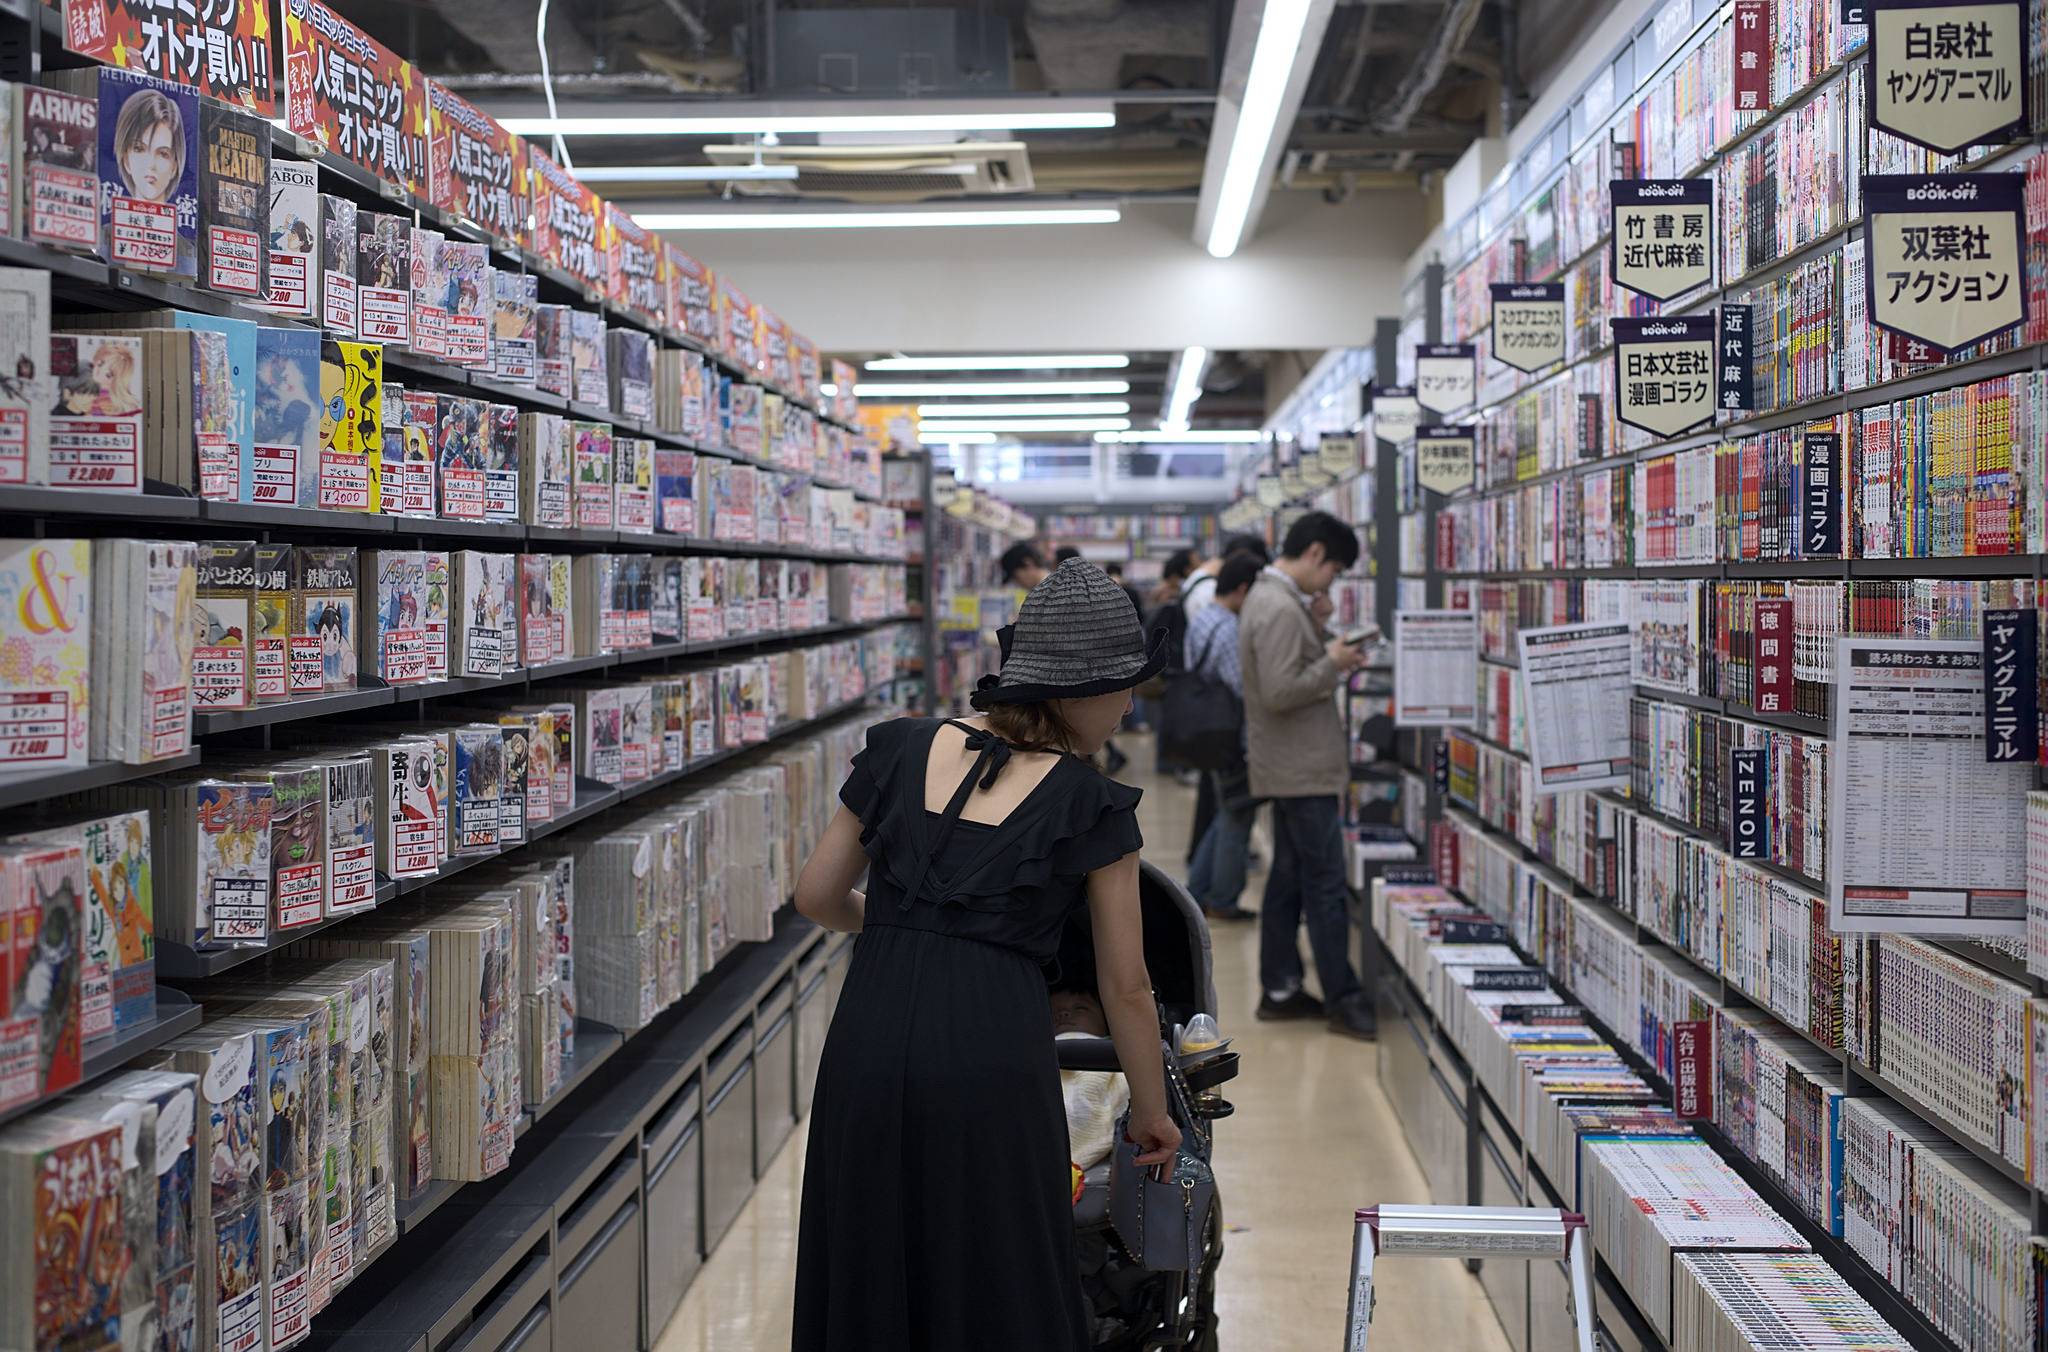 Manga is addressing Japanese workplace woes